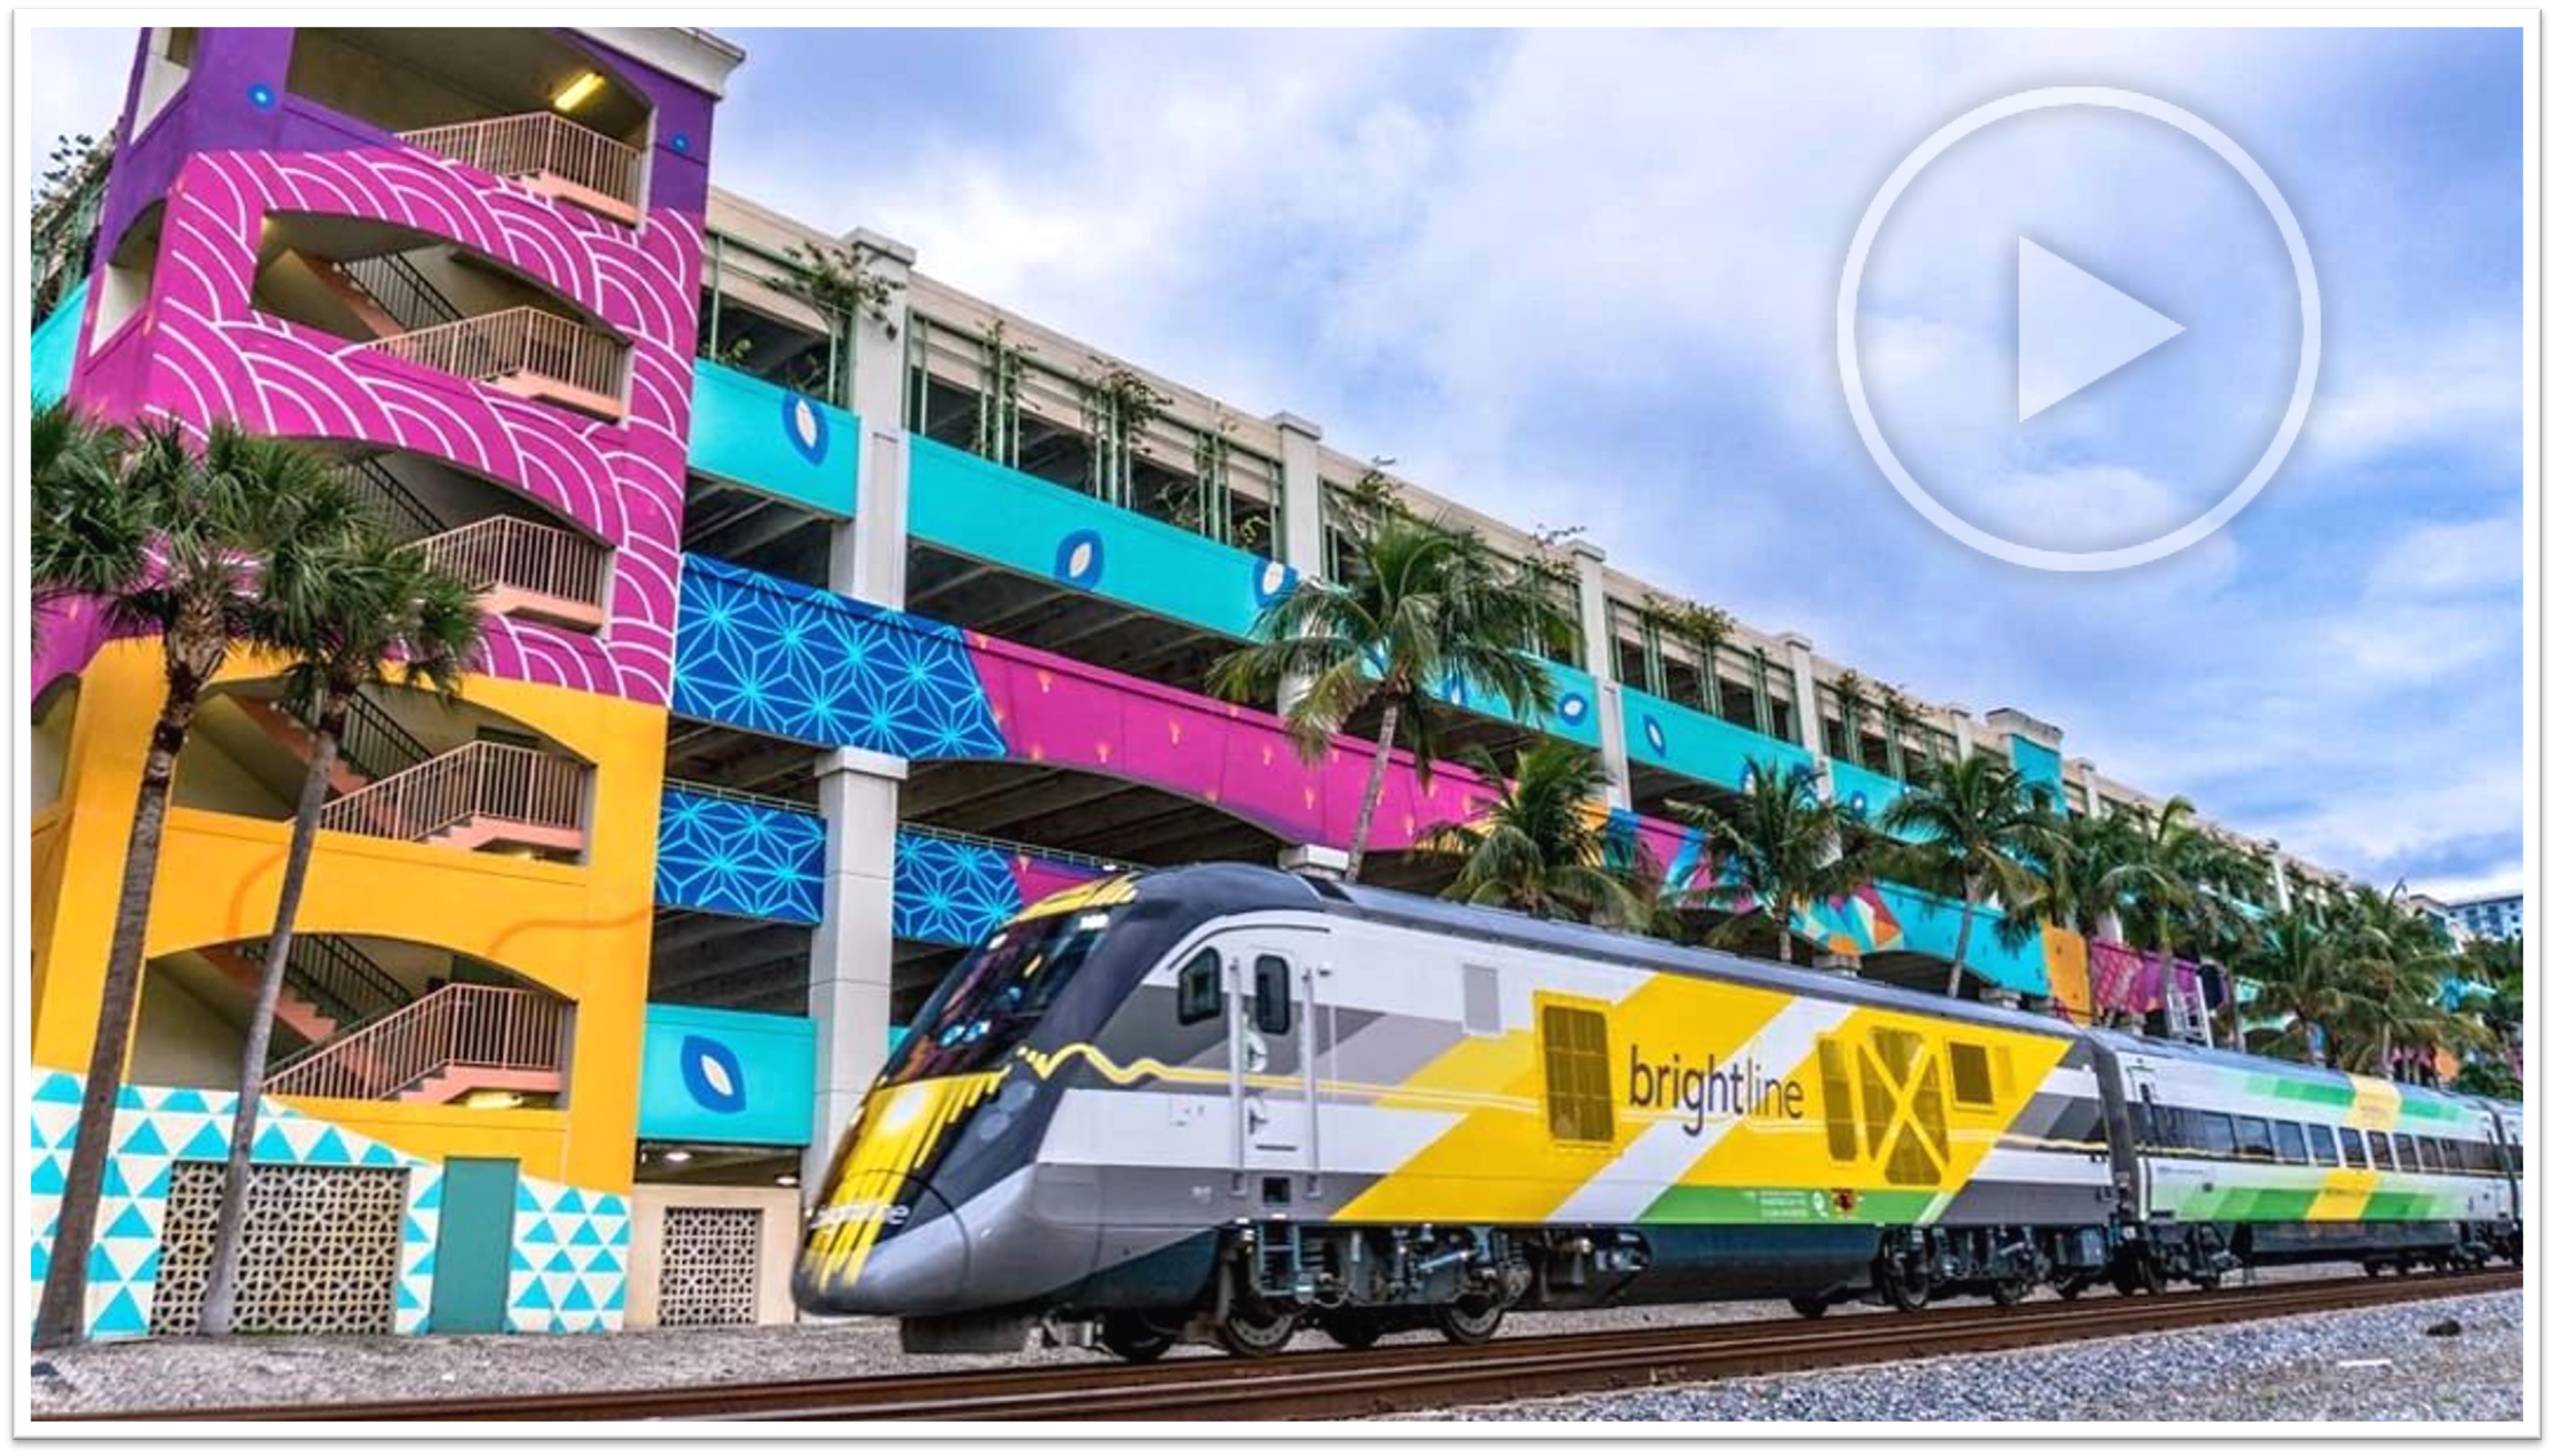 Orlando’s newest, and unique ride, the Brightline train located at the Orlando International Airport. 